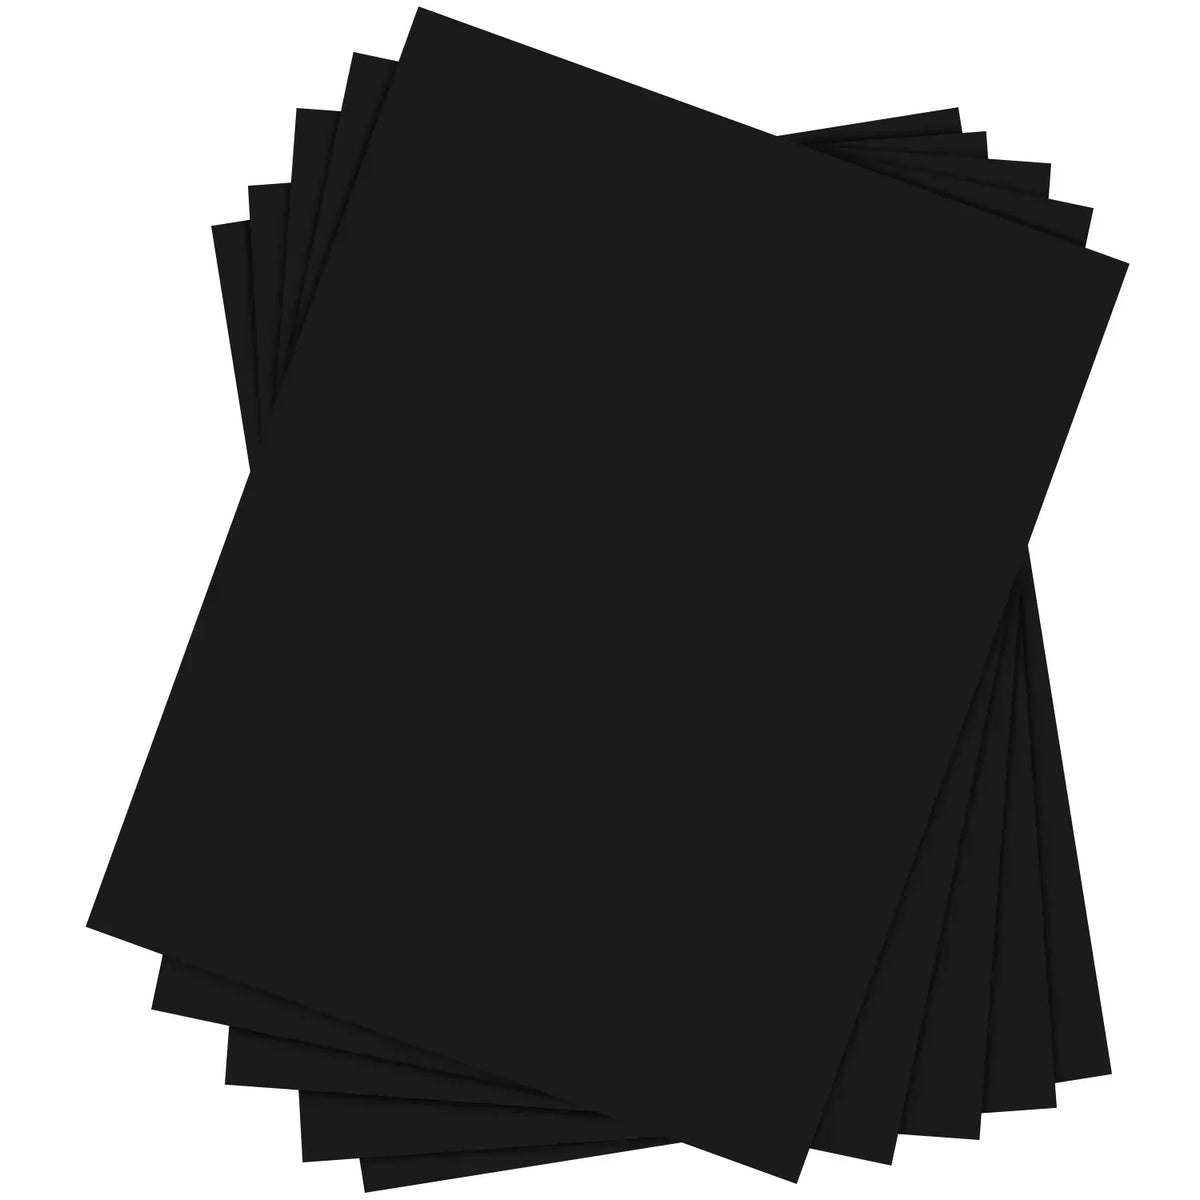 Black Board/ Black Cardboard/Black Chipboard